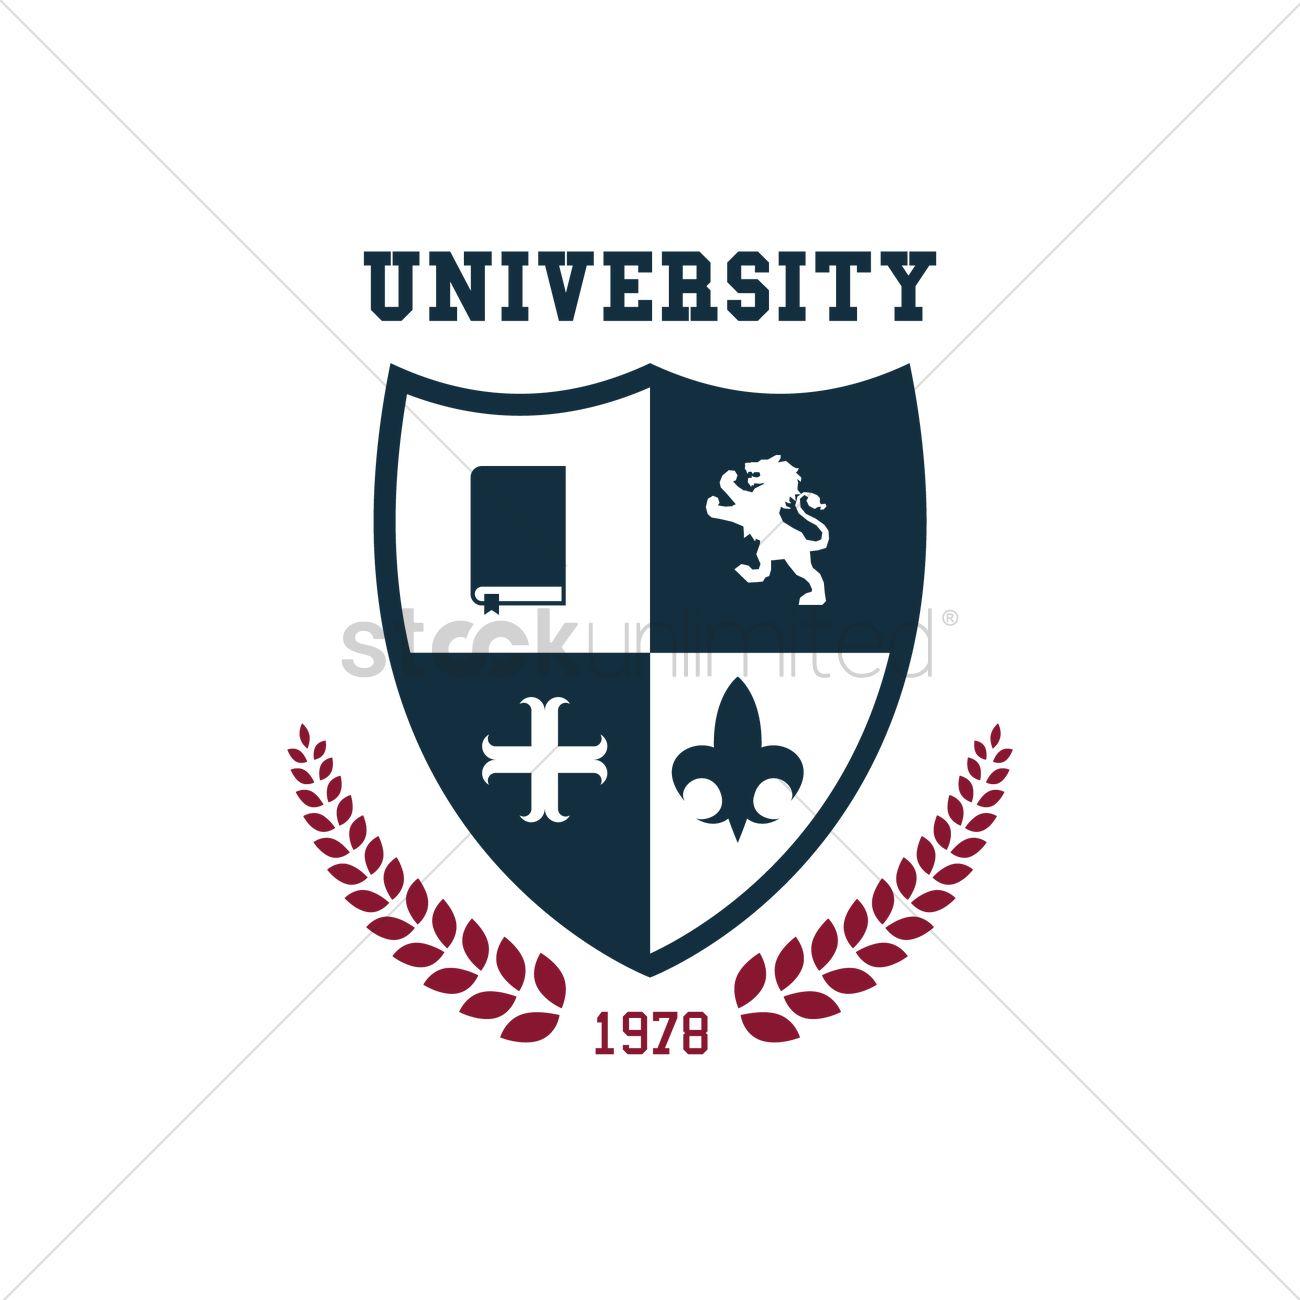 Universities Logo - University logo design Vector Image - 1976103 | StockUnlimited